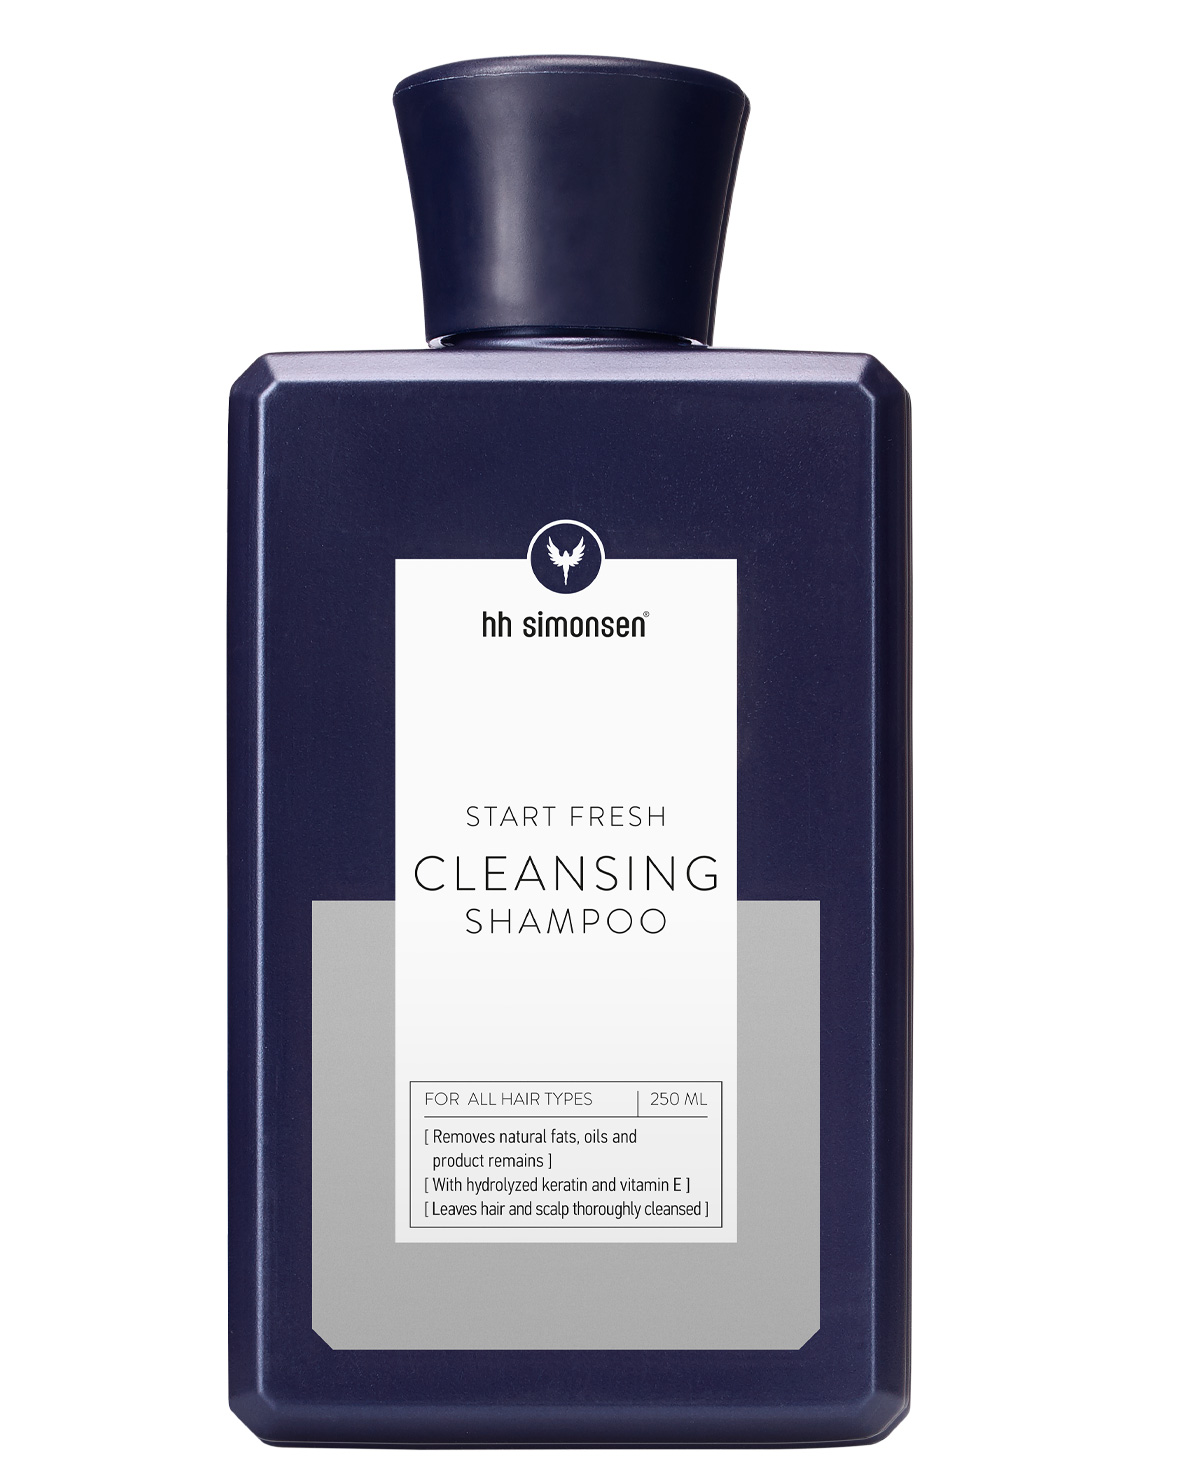 HH Simonsen Cleansing Shampoo 250ml